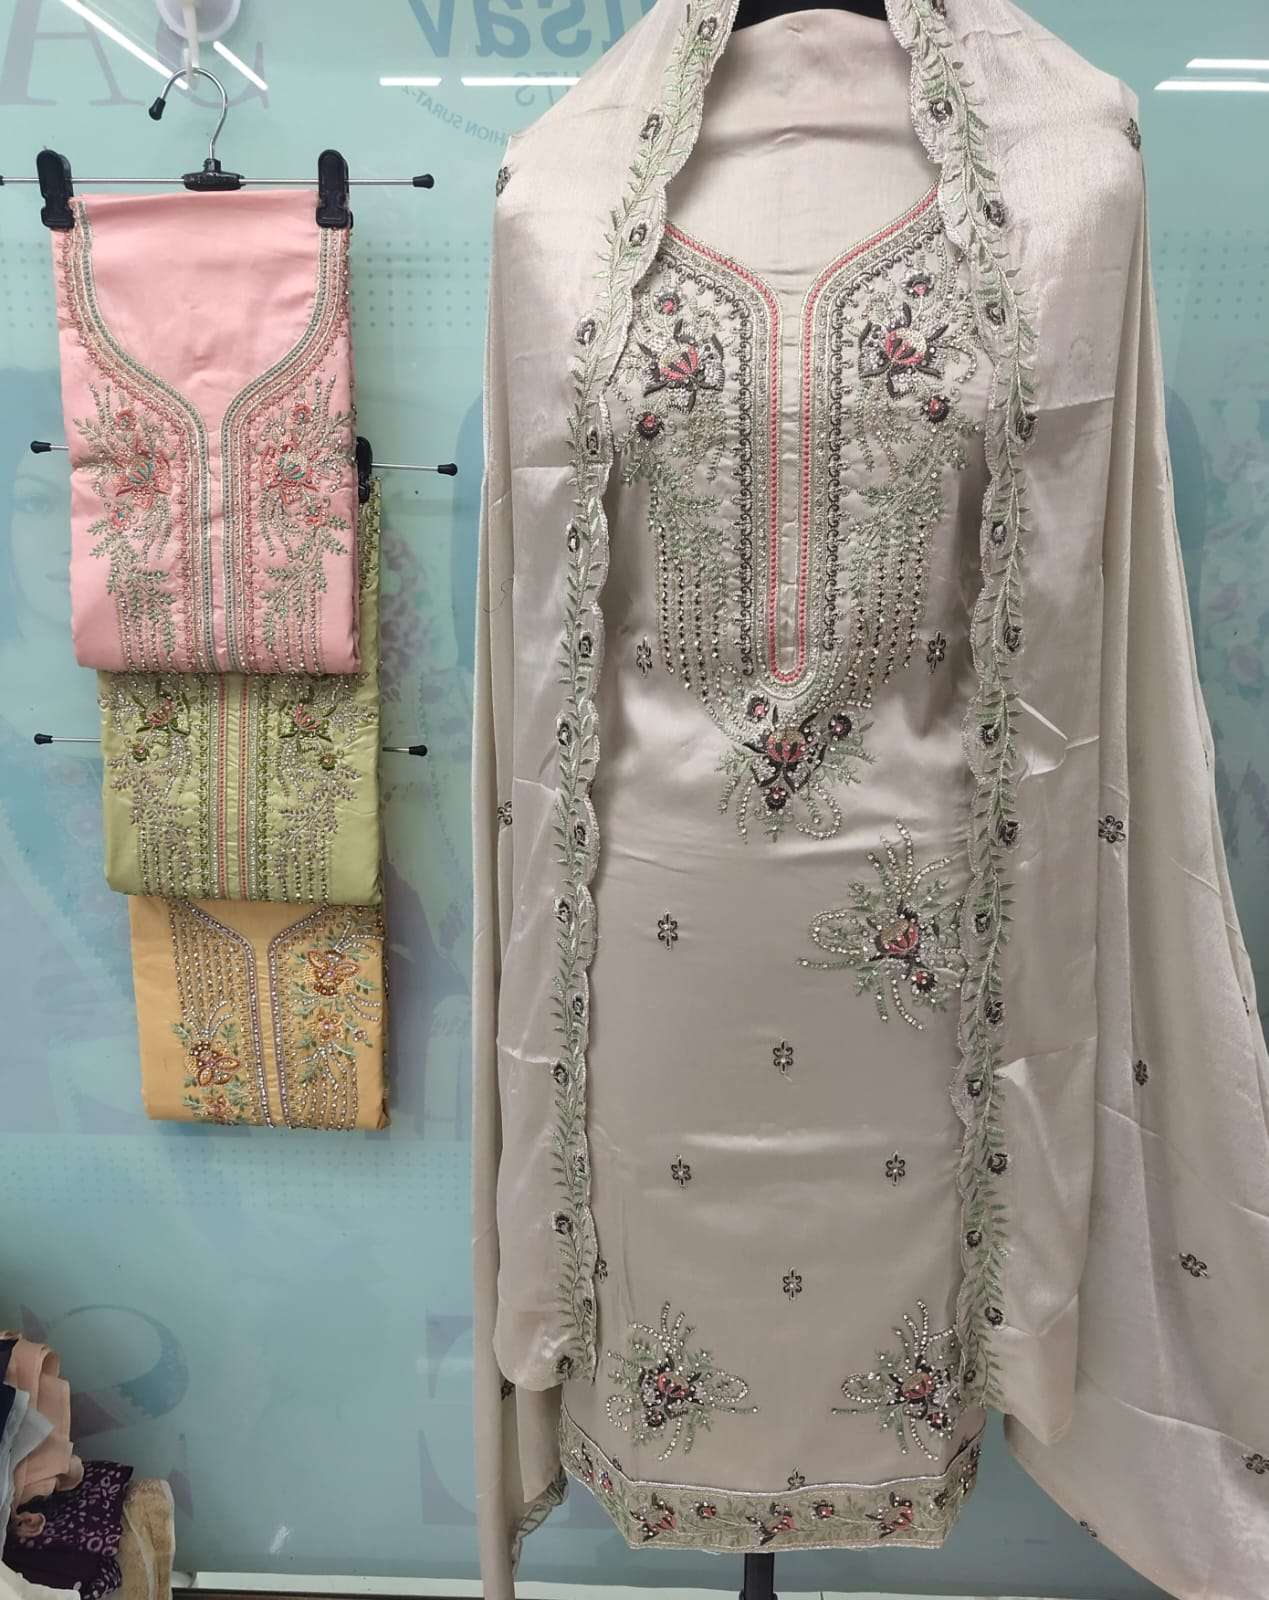 utsav suits present heena beautiful designer pakistani salwar kameez collection